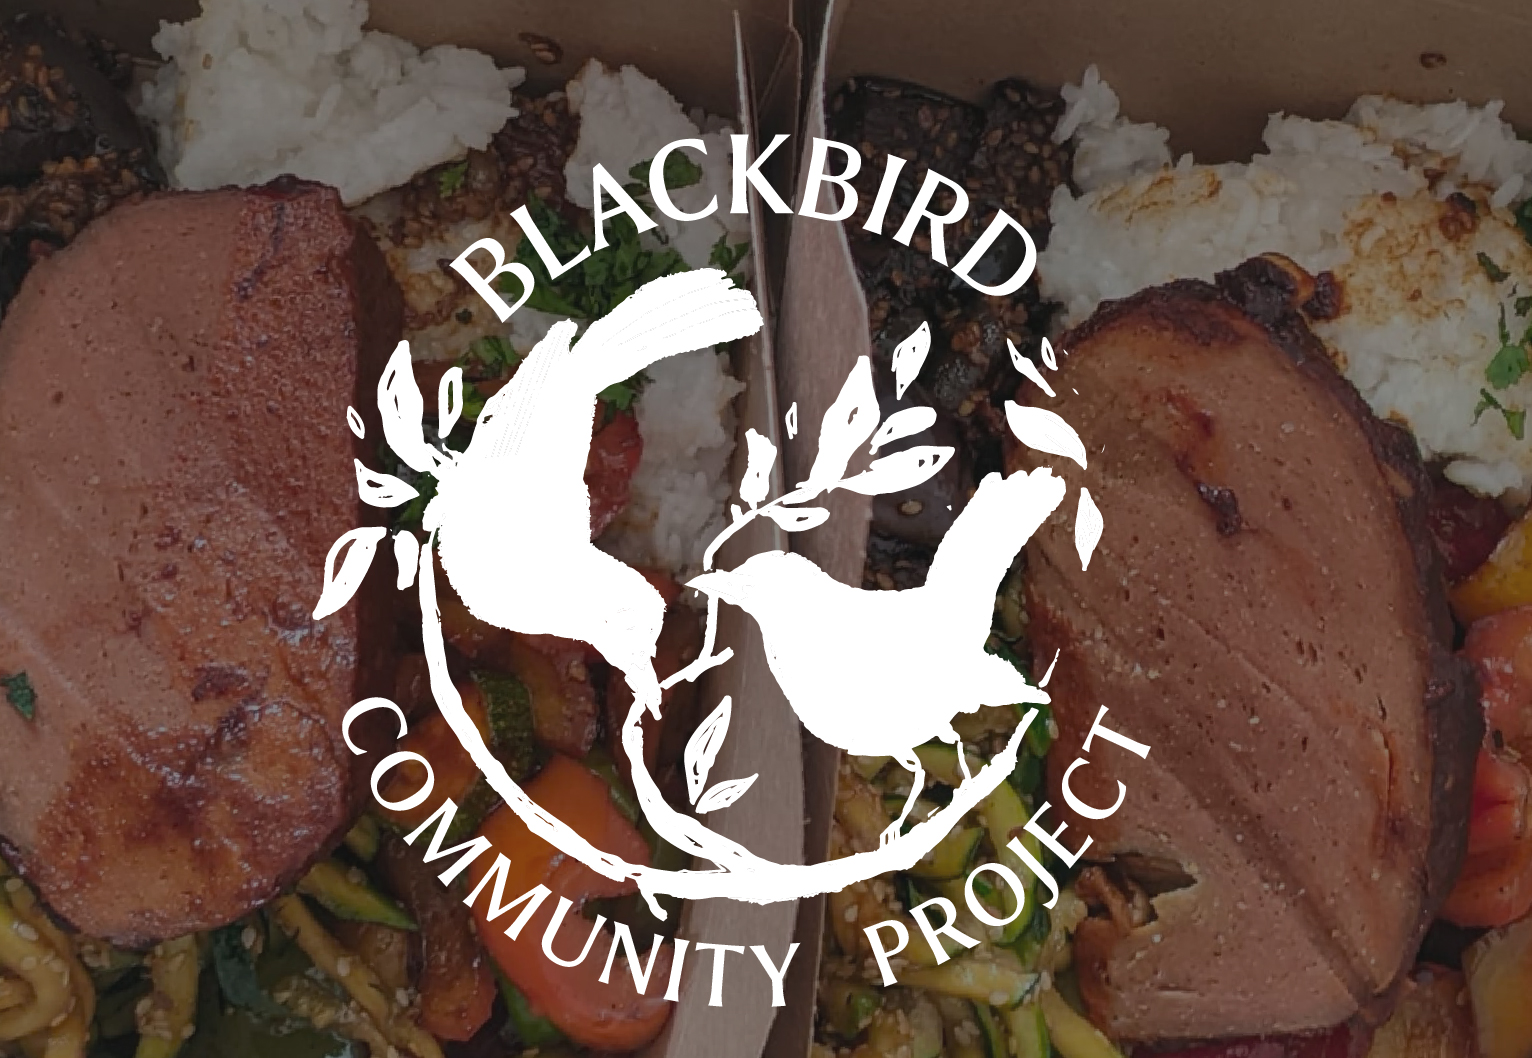 House projects: Blackbird Community